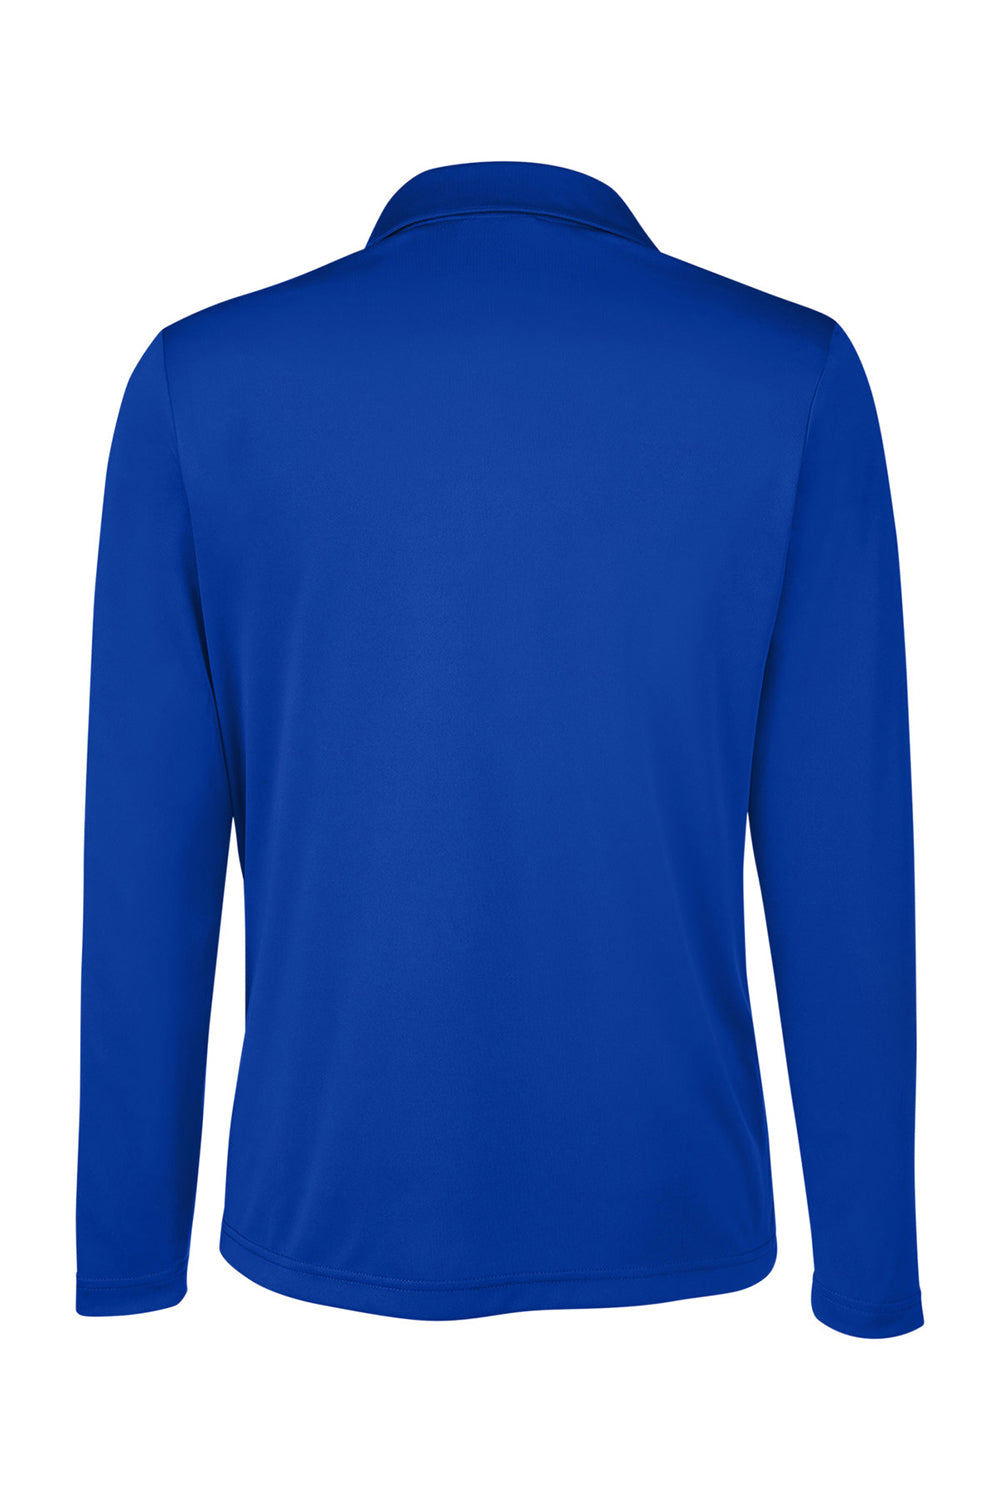 Team 365 TT51LW Womens Zone Sonic Moisture Wicking Long Sleeve Polo Shirt Royal Blue Flat Back